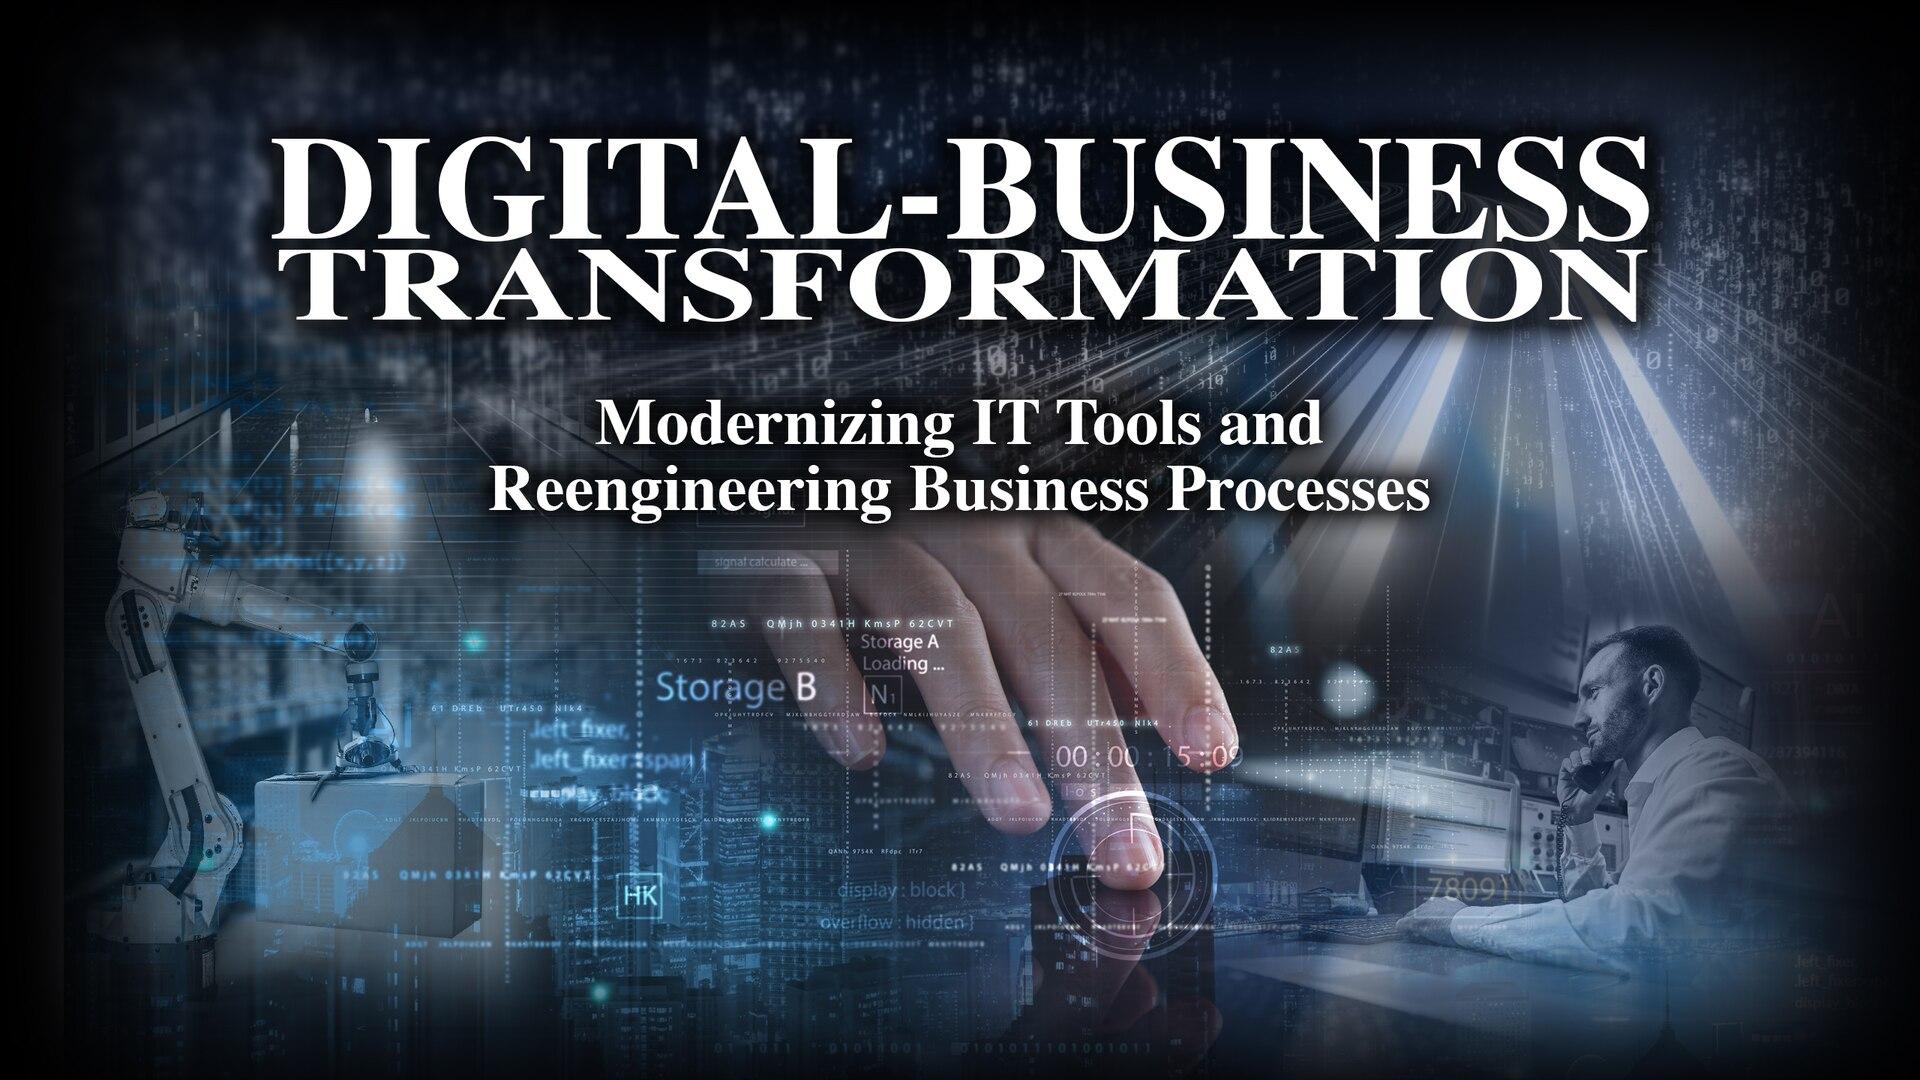 Digital-Business Transformation focuses on modernizing technology ...